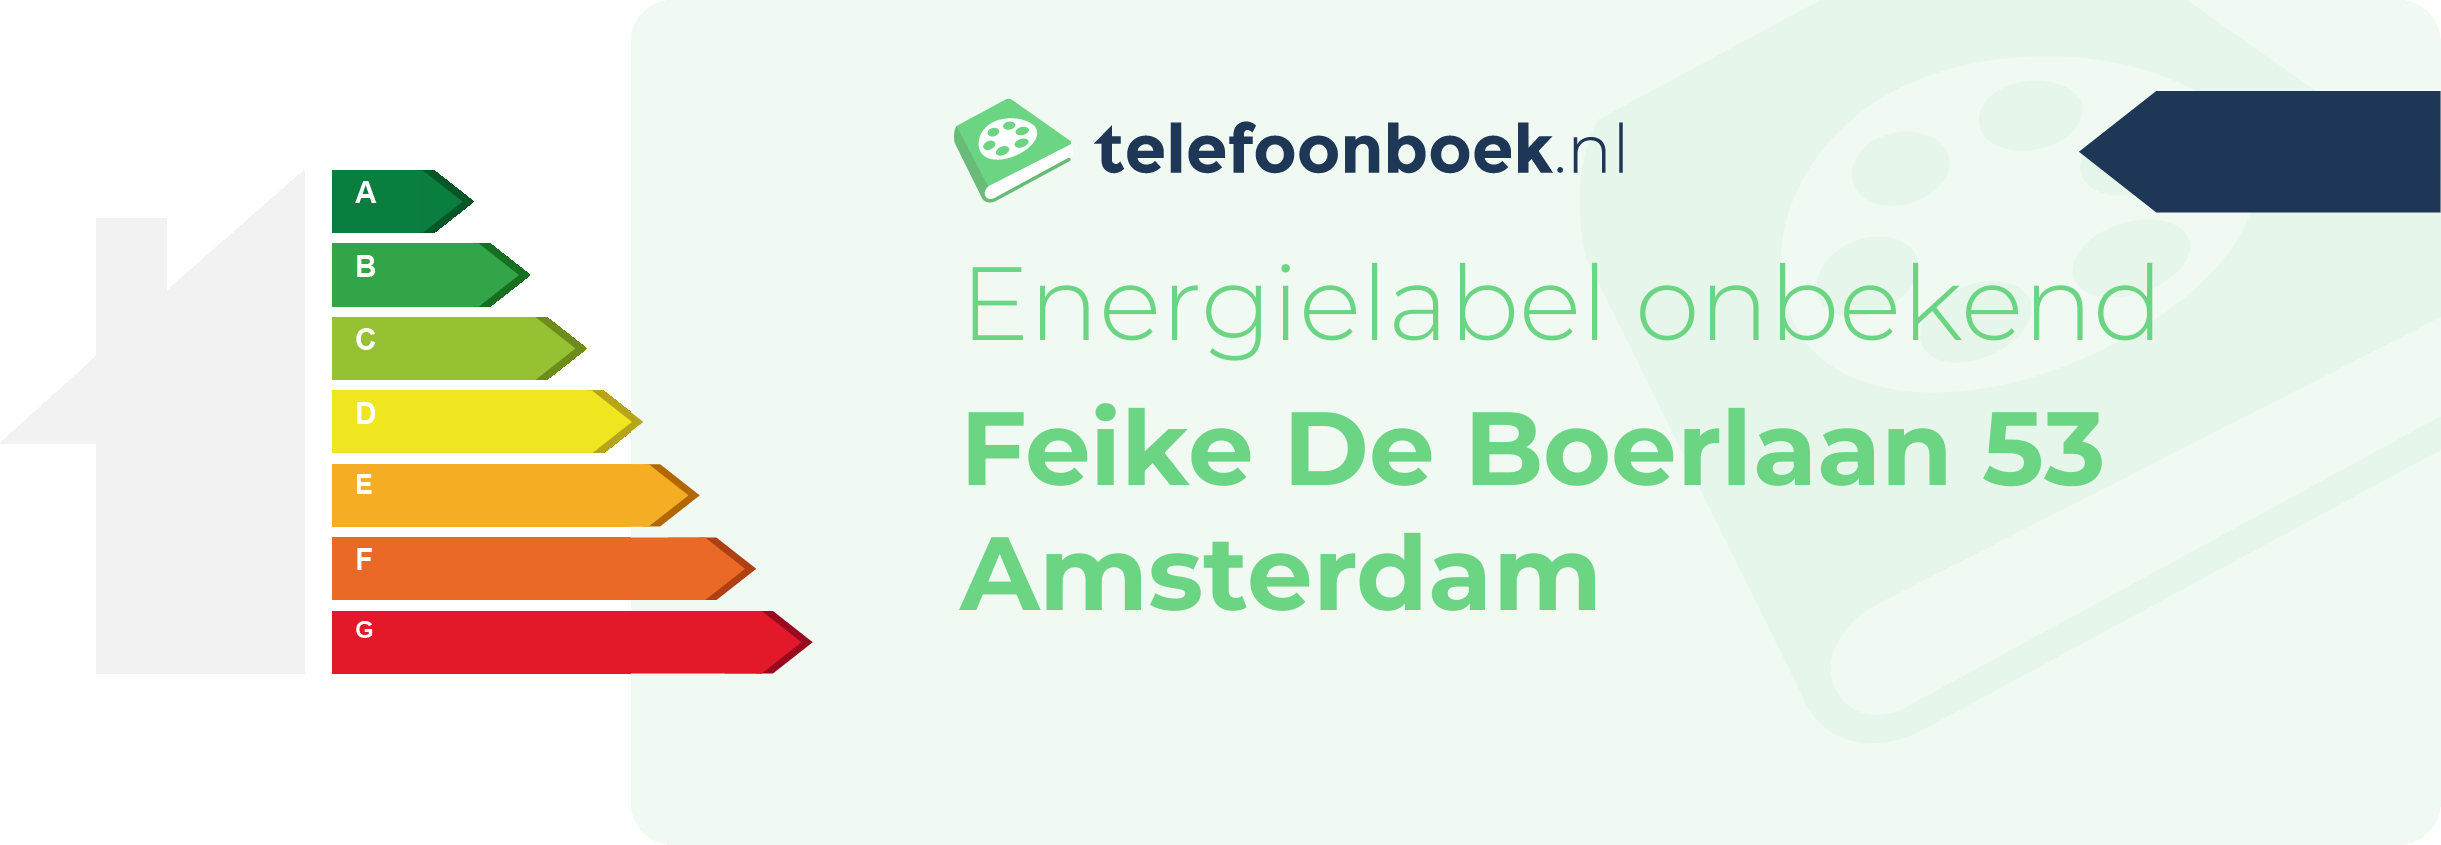 Energielabel Feike De Boerlaan 53 Amsterdam